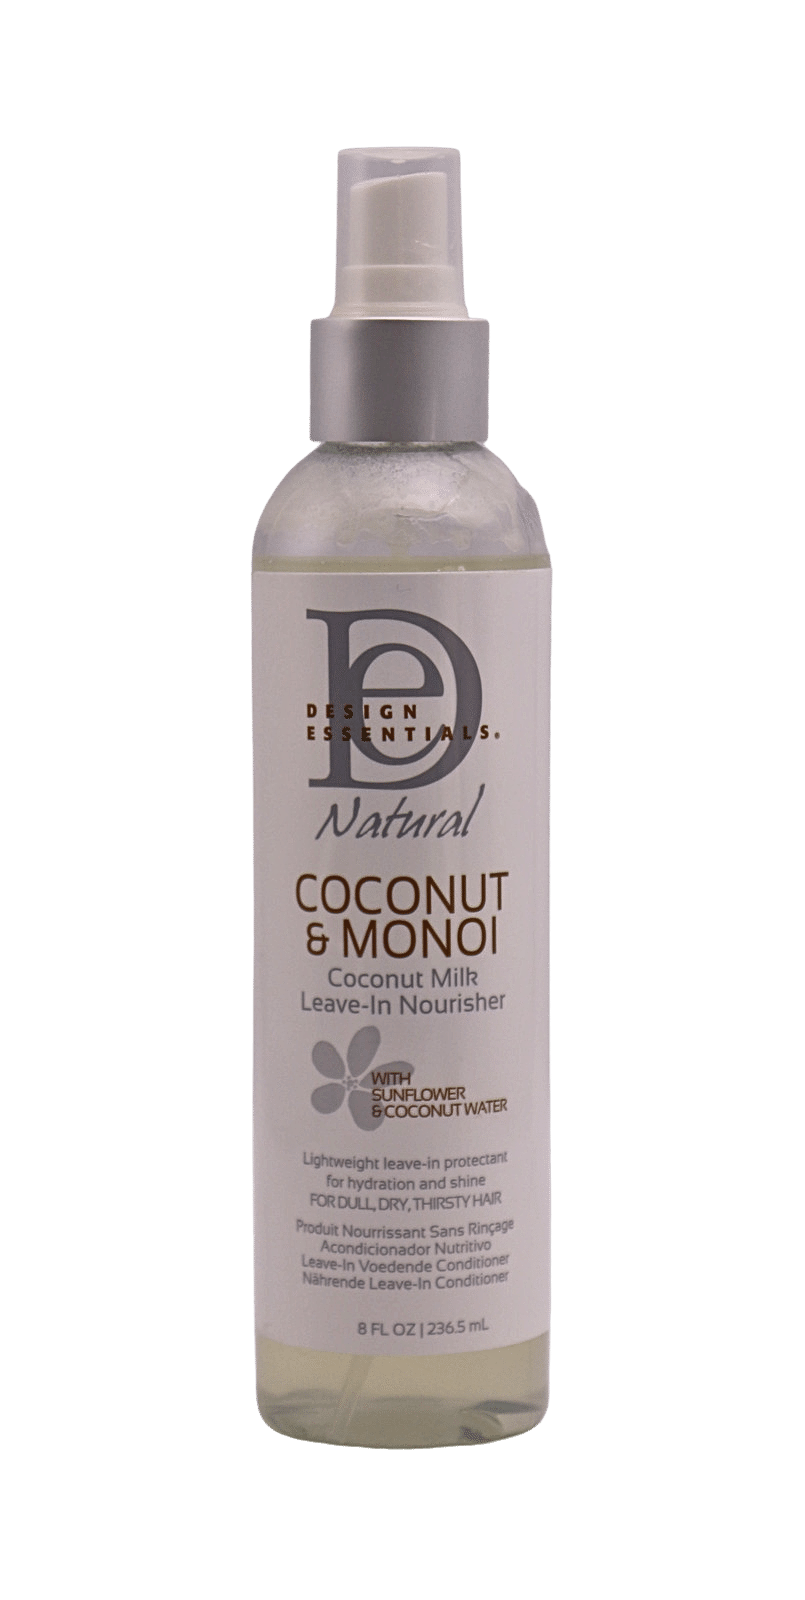 Coconut & Monoi  COCONUT MILK LEAVE-IN NOURISHER